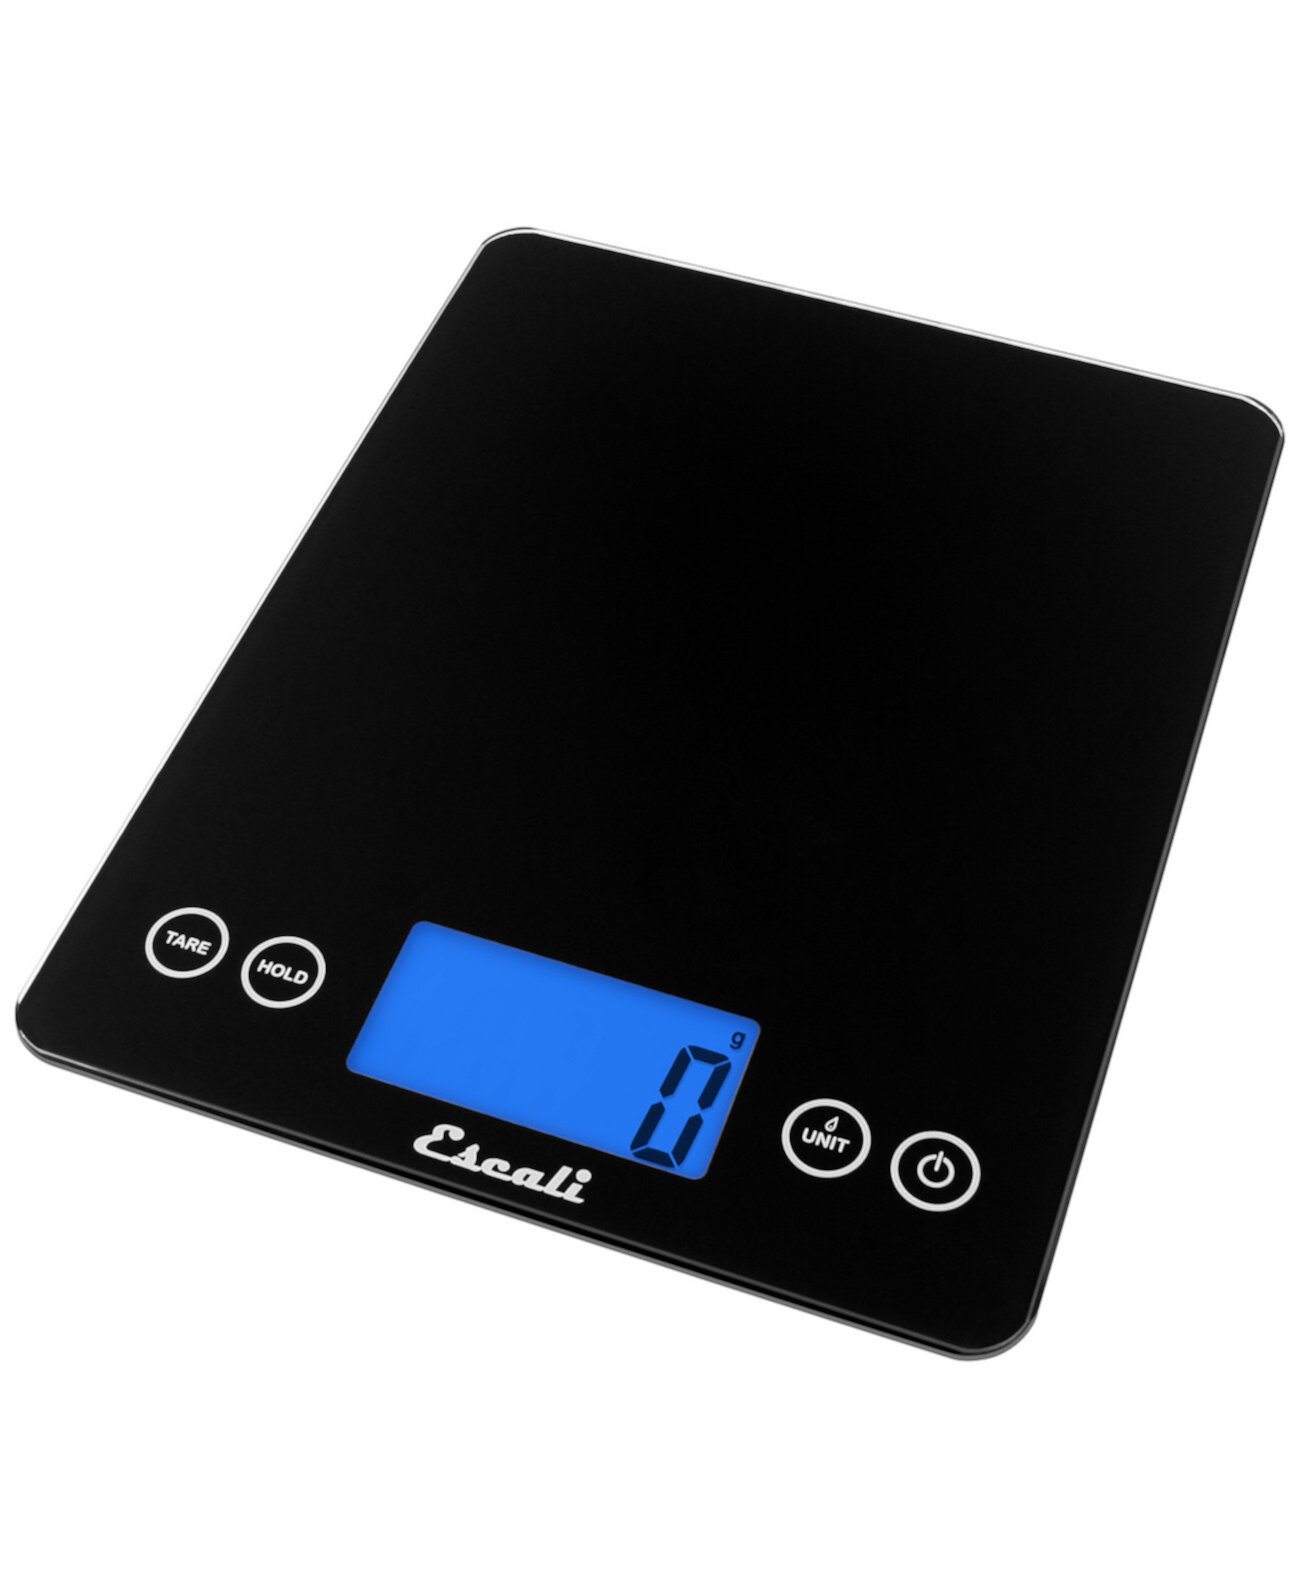 Стеклянные цифровые весы Corp Arti XL, 22 фунта Escali